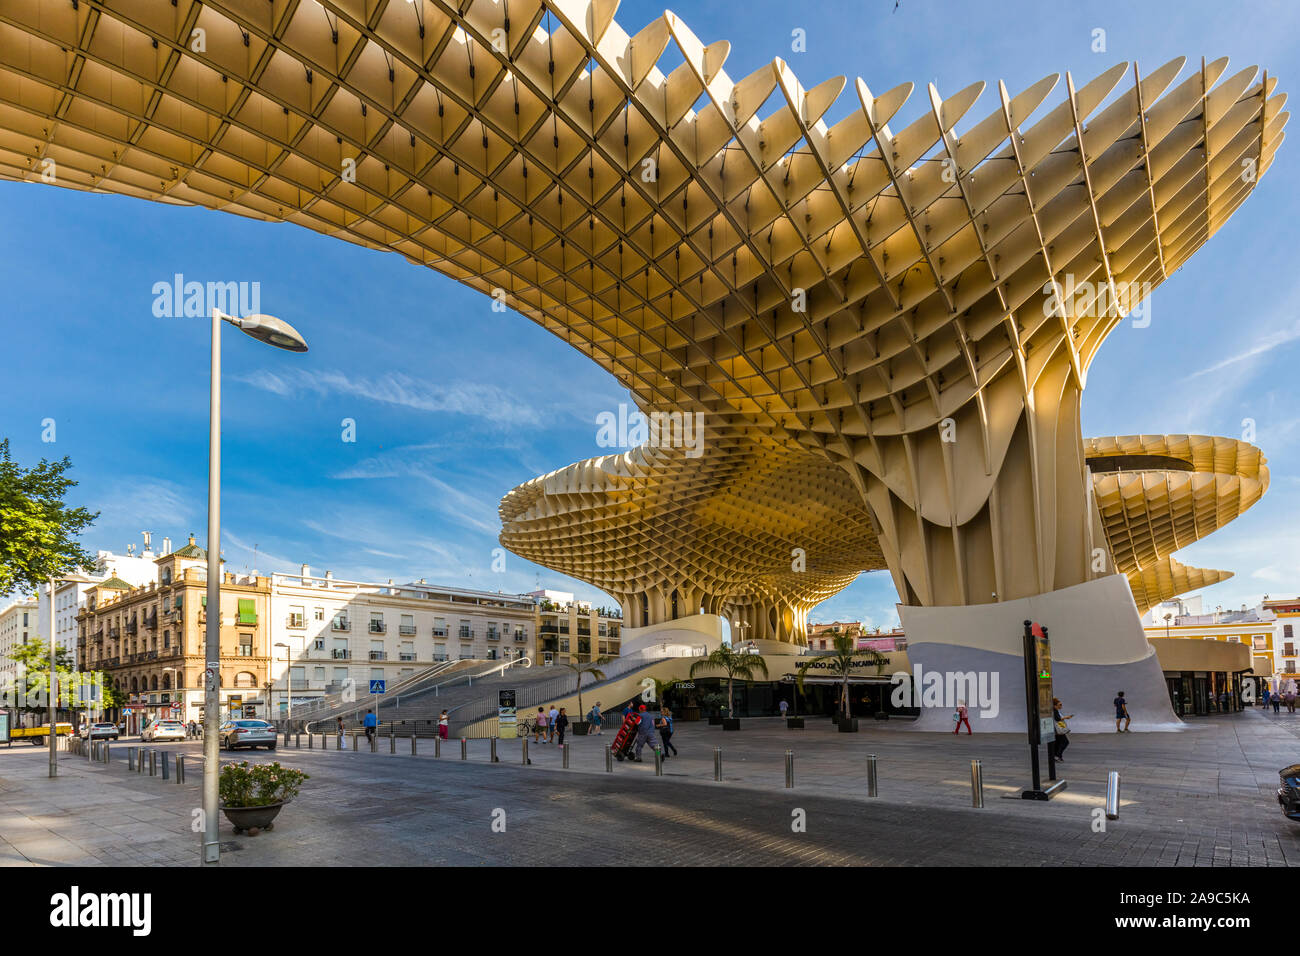 Mettopol Parasol or Incarnacion’s Mushrooms a wooden structure in La Encarnacion square in Seville Spain Stock Photo